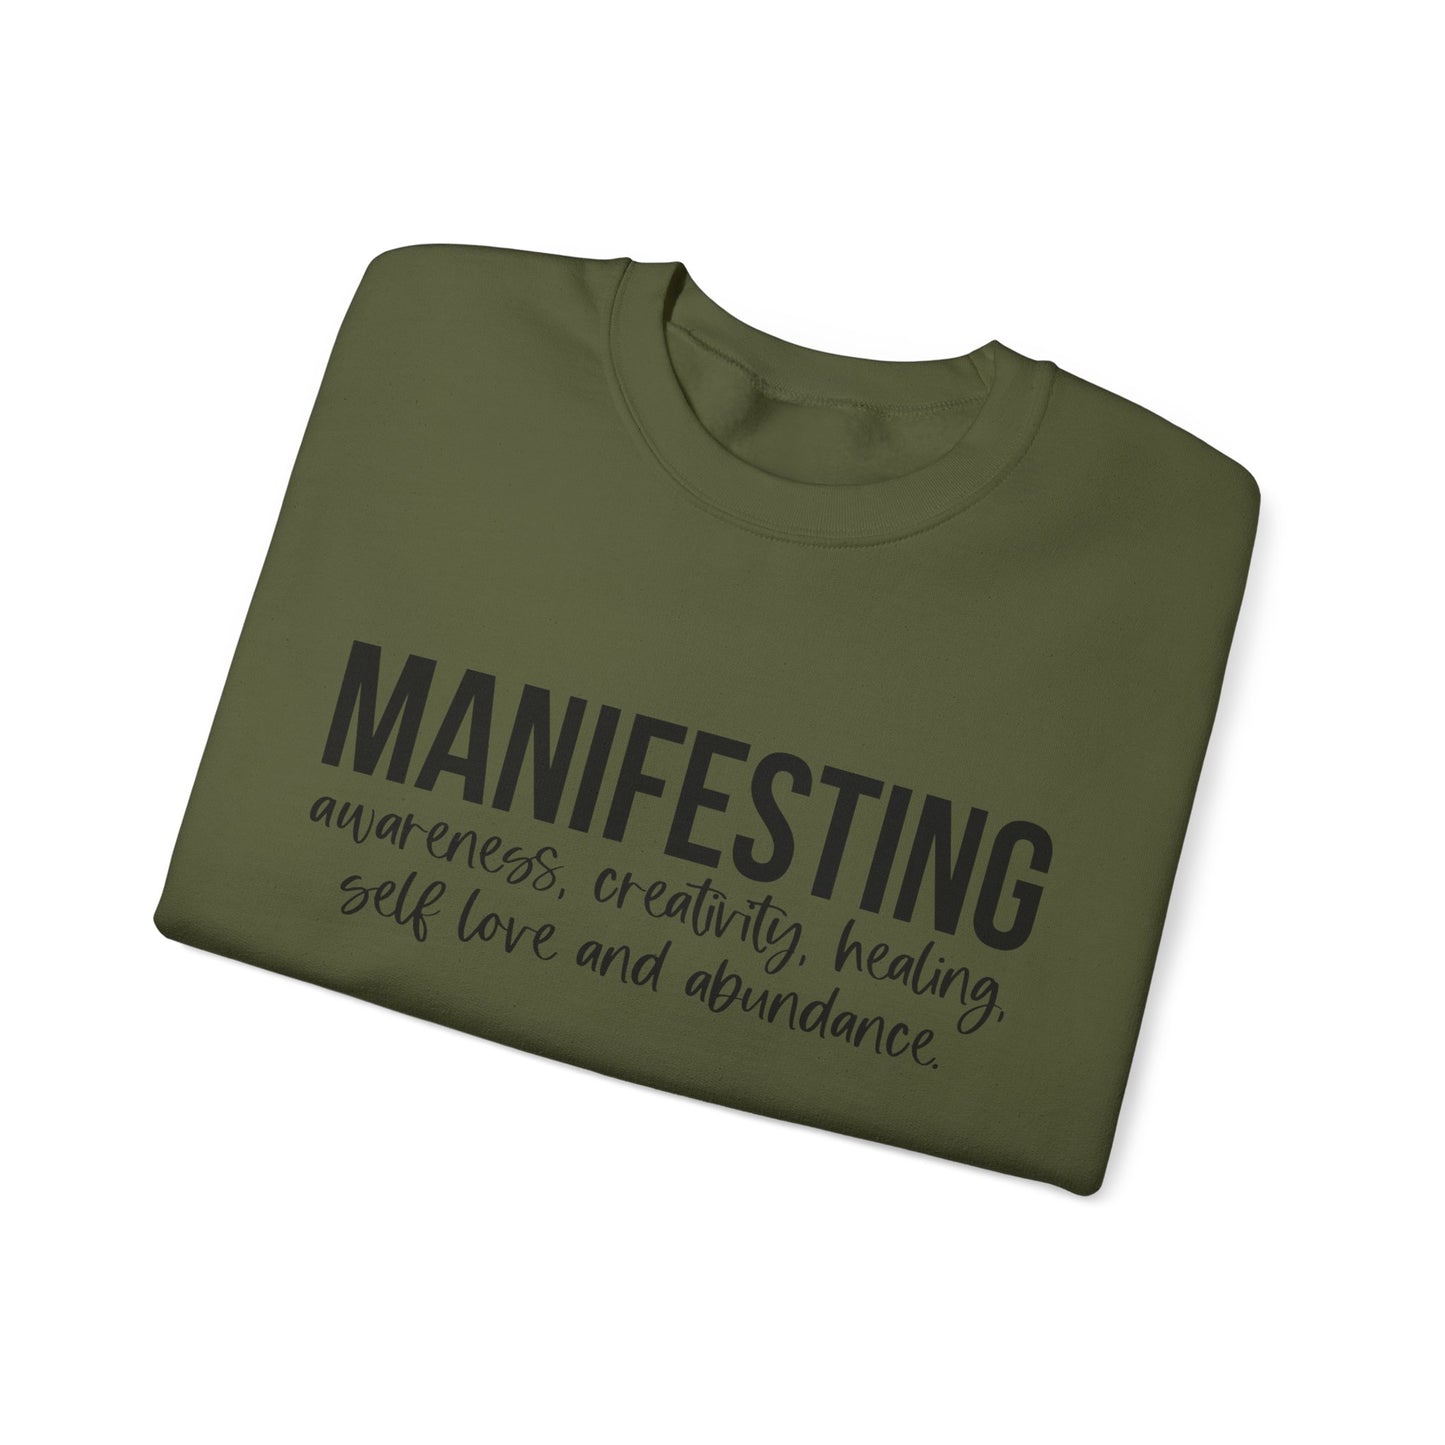 Manifesting Sweatshirt